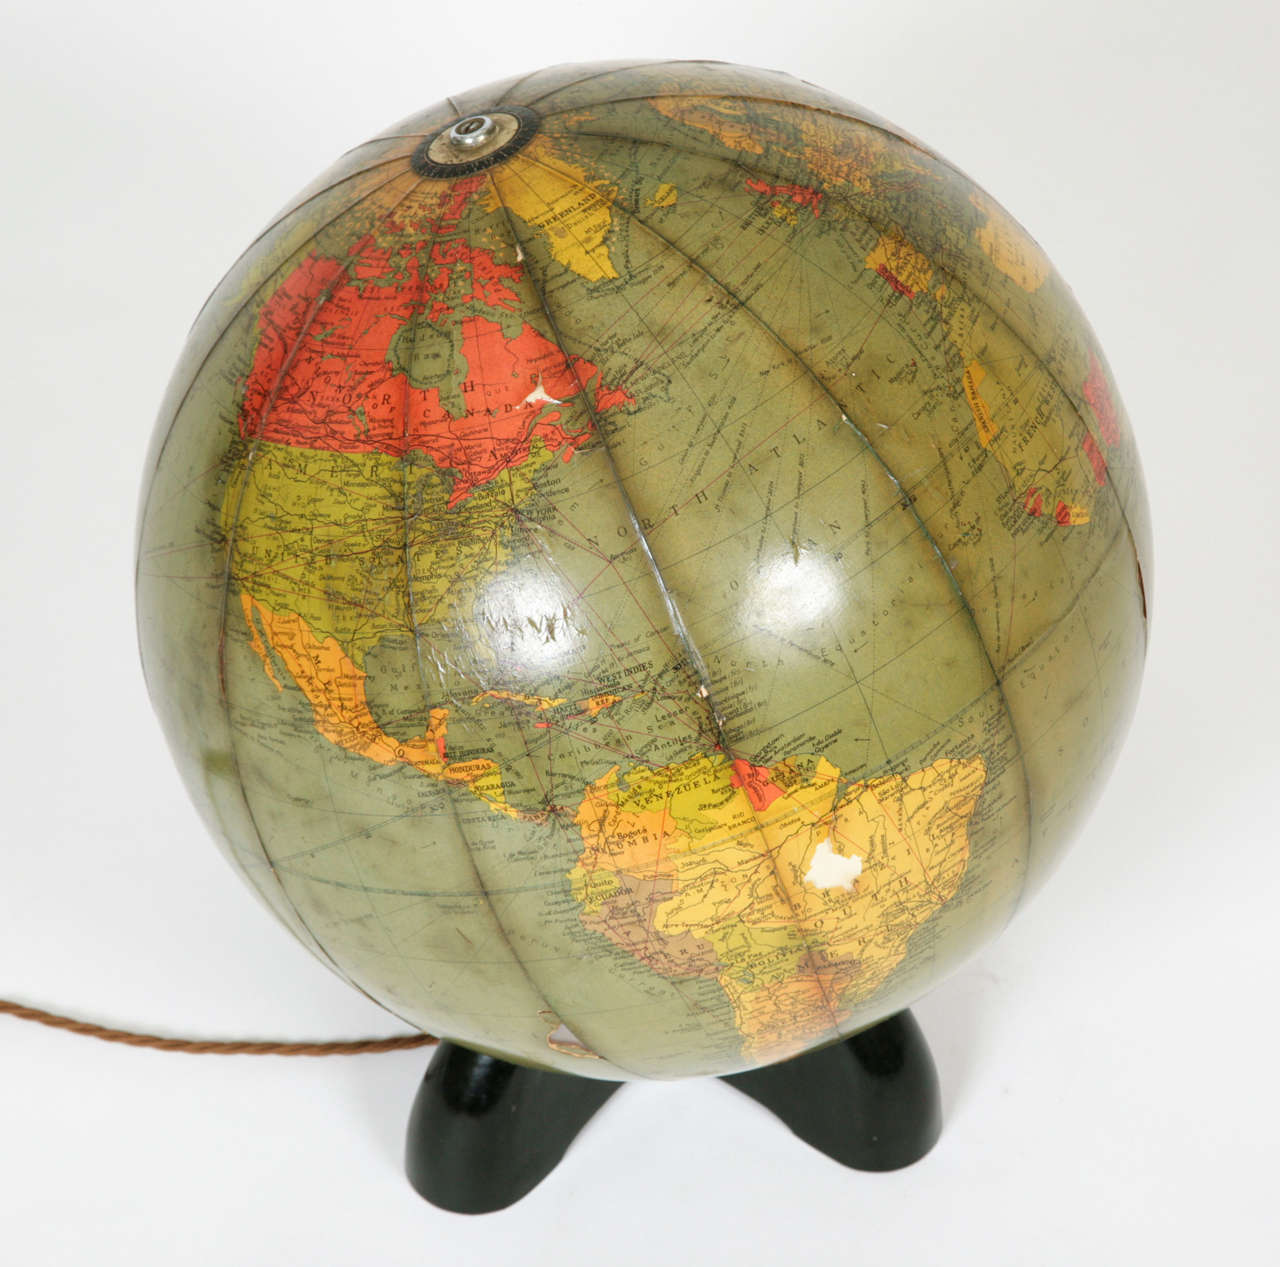 This globe lights up